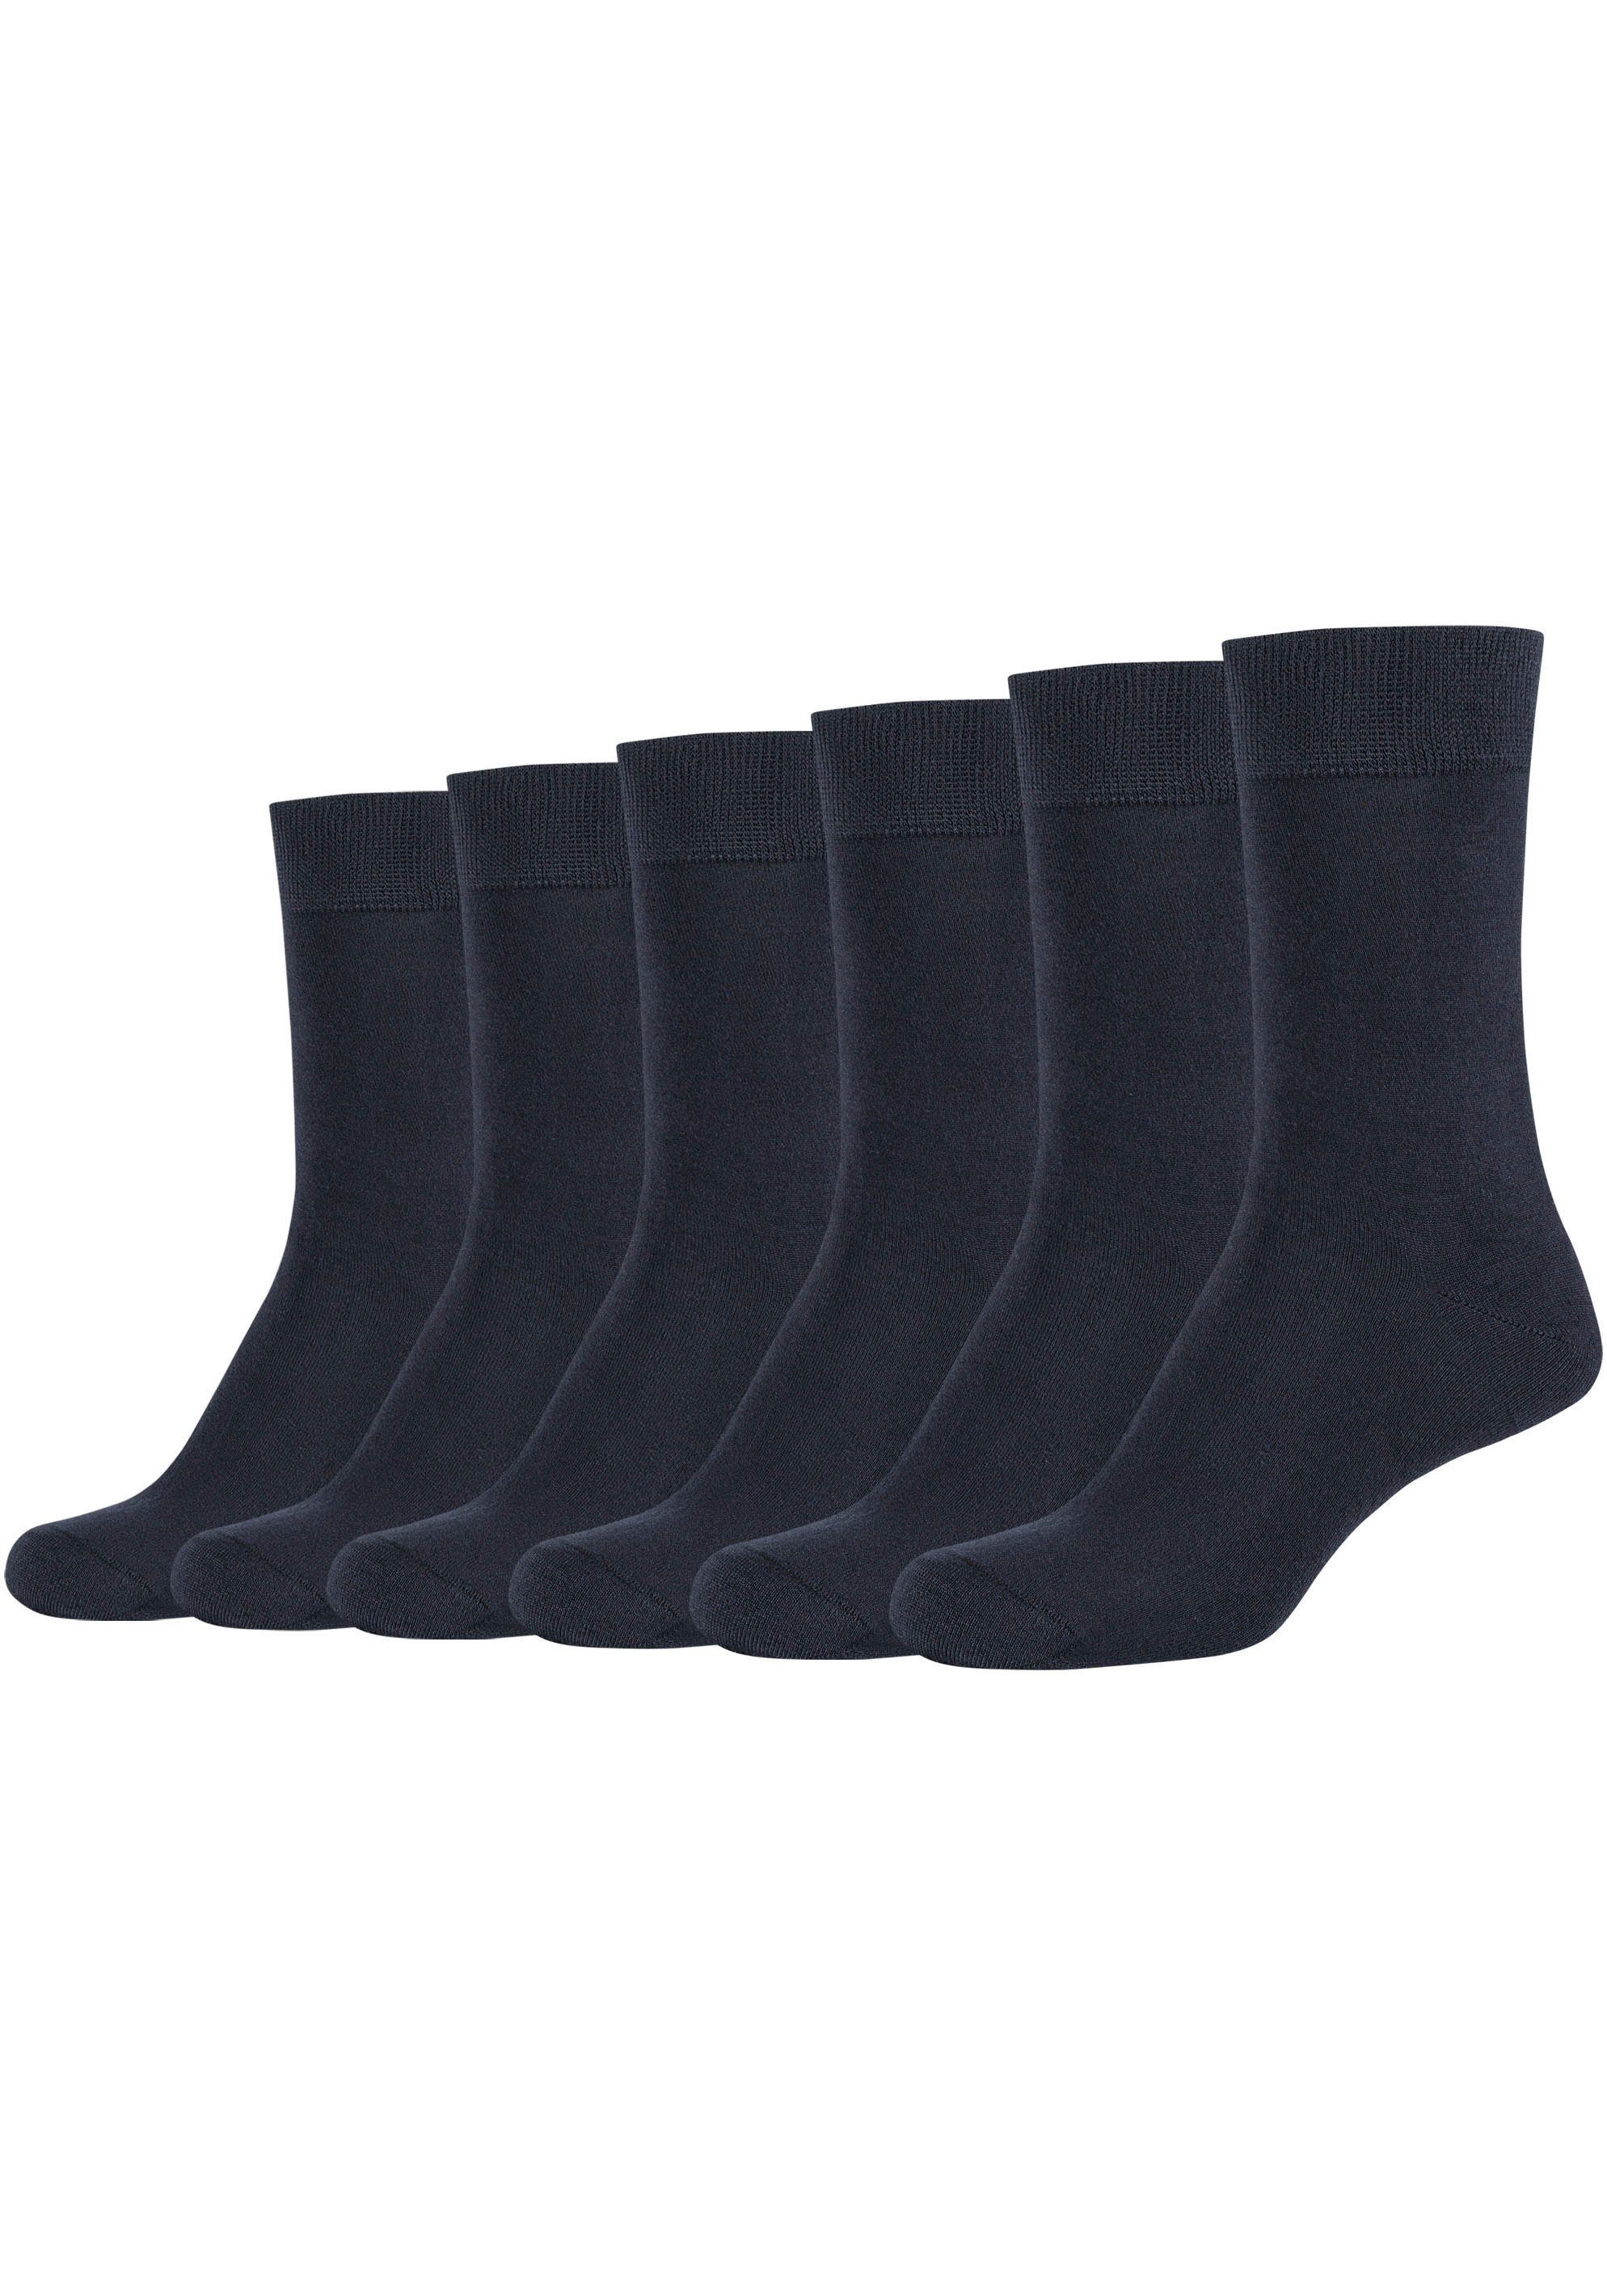 Socken dunkelblau Mit Camano Zehennaht 6-Paar) (Packung, hangekettelter